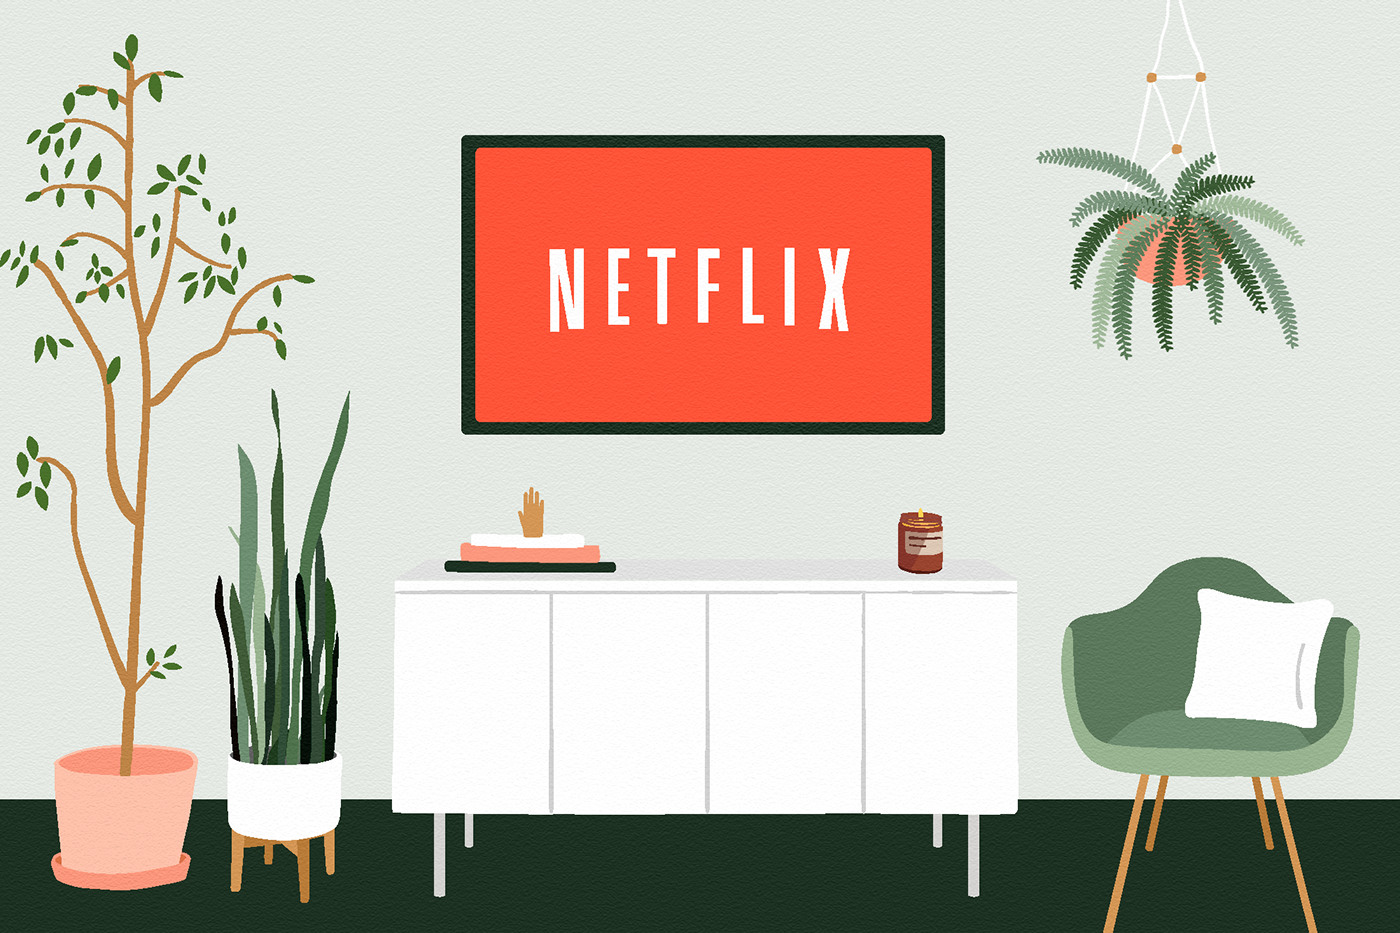 Netflix Apartment Therapy plants interior design  chill Digital Art  ILLUSTRATION  editorial art